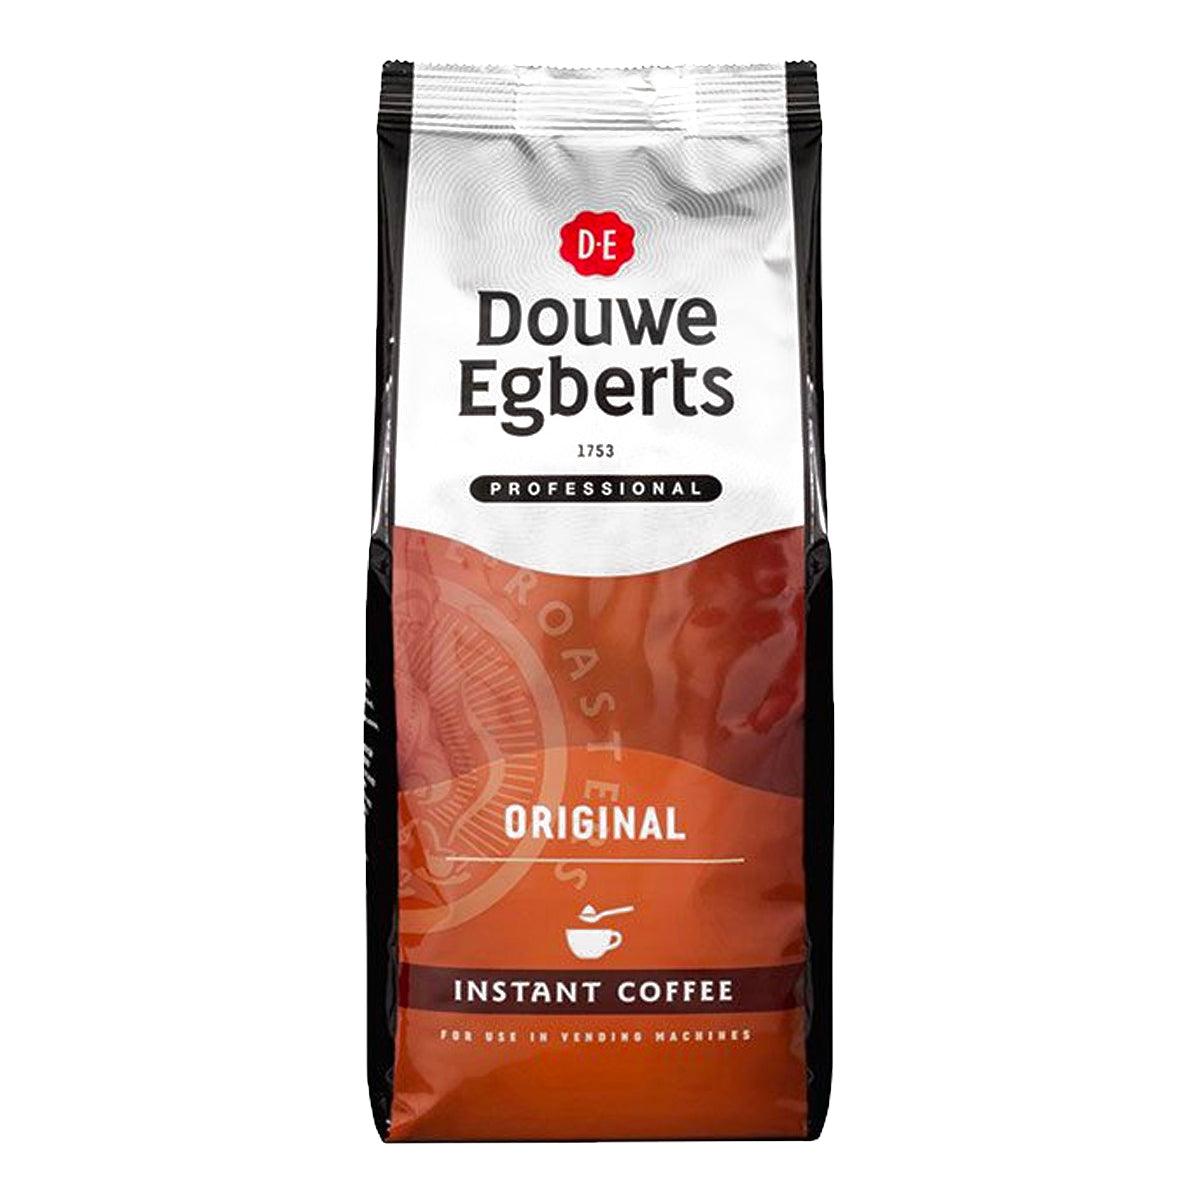 Douwe Egberts Original Freezedried Vending Coffee - 300g Bag - Vending Superstore